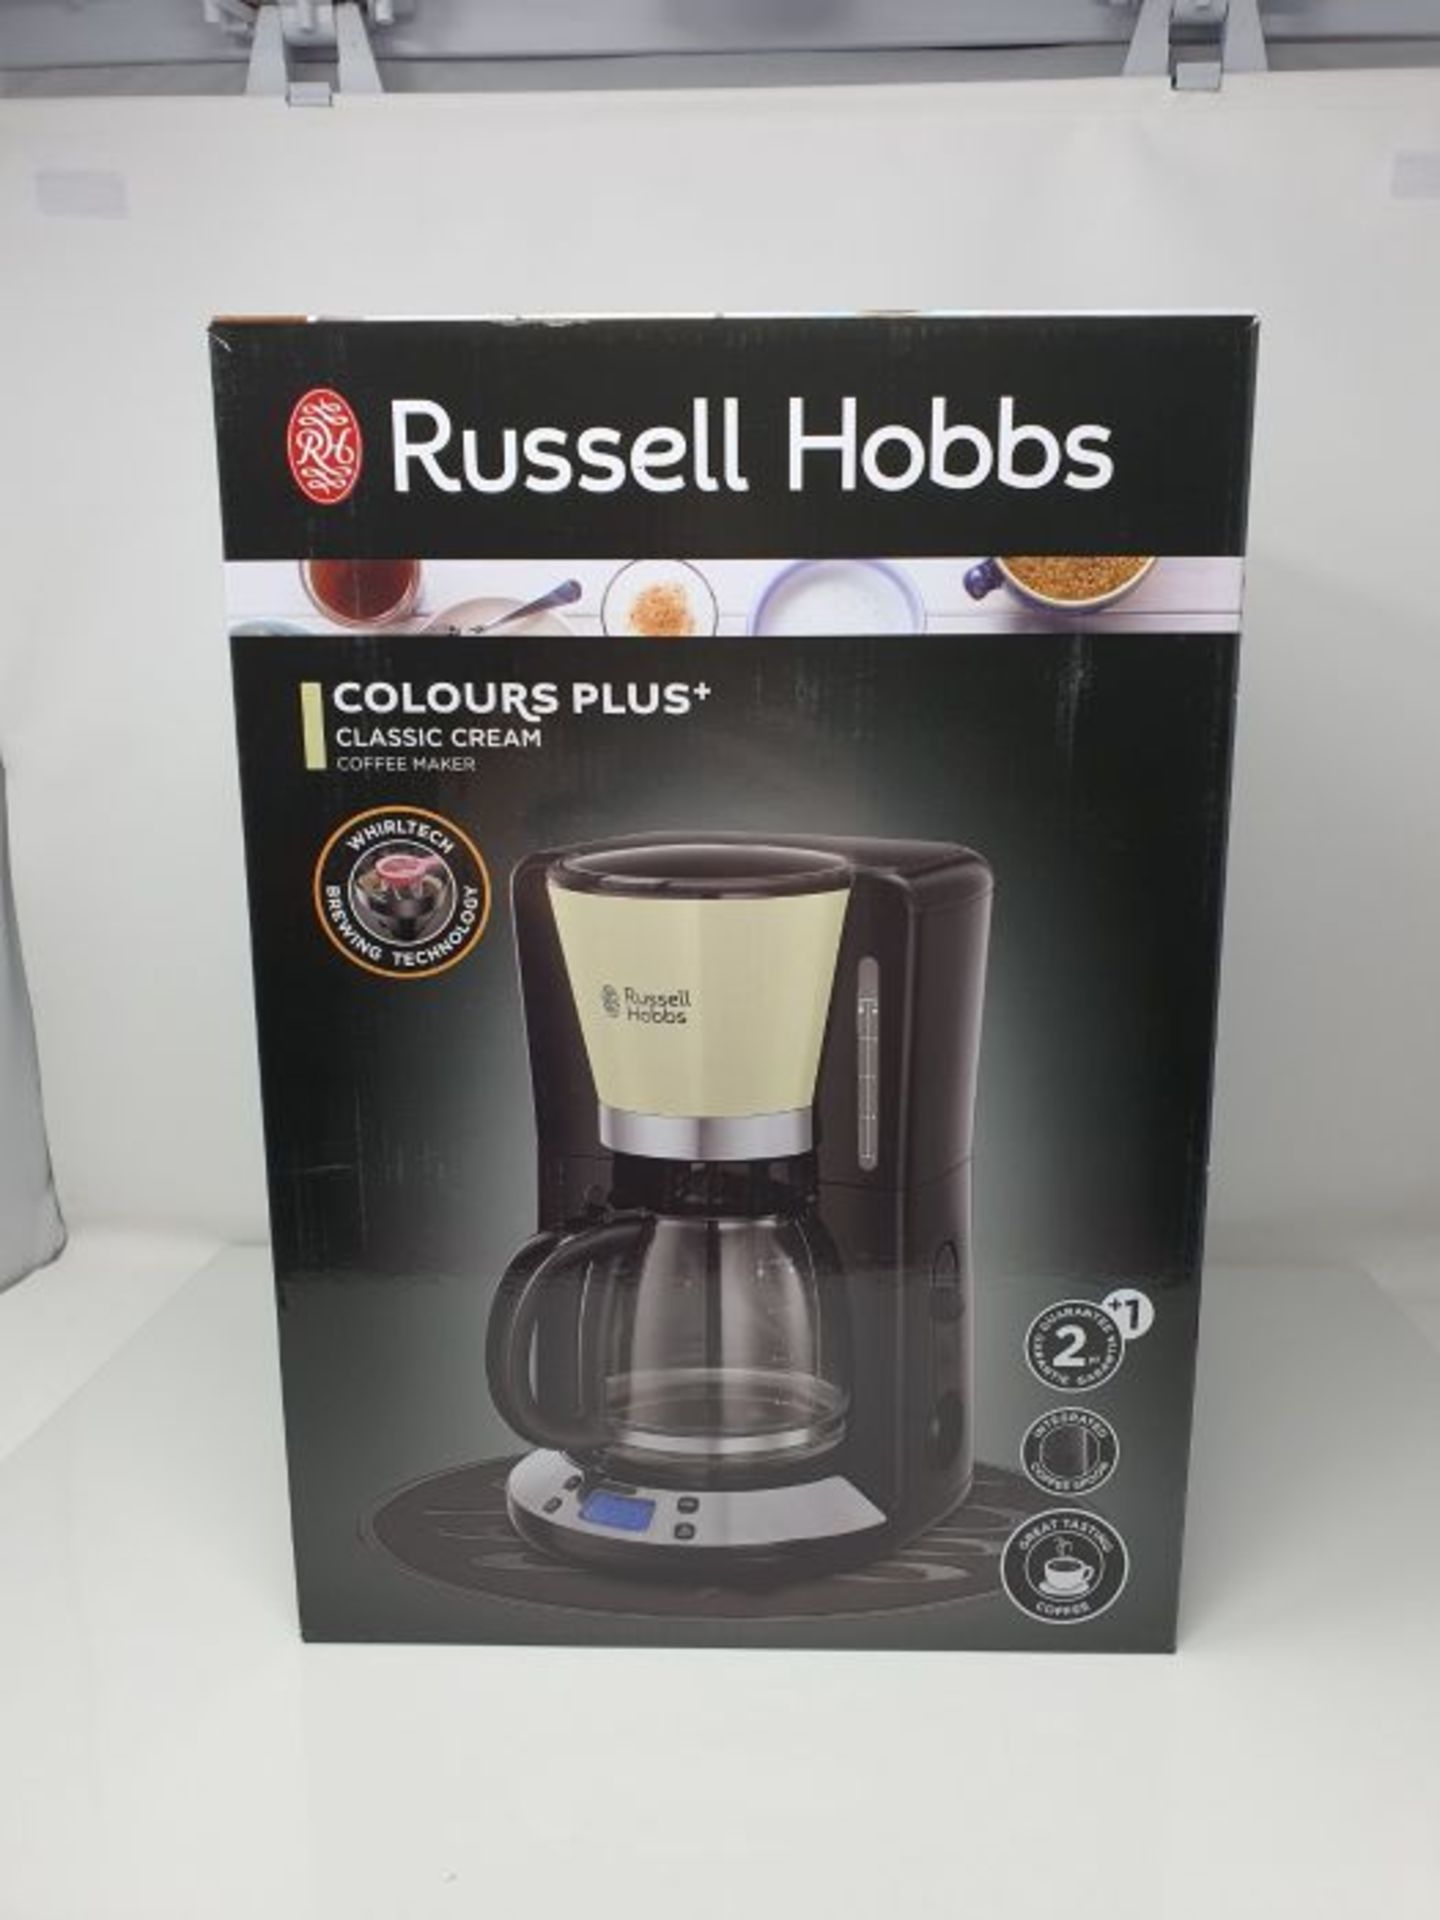 Russell Hobbs 24033 56 Digital Glass Coffee Maker, 1100, Stainless Steel, 1.25 Litr - Image 2 of 3